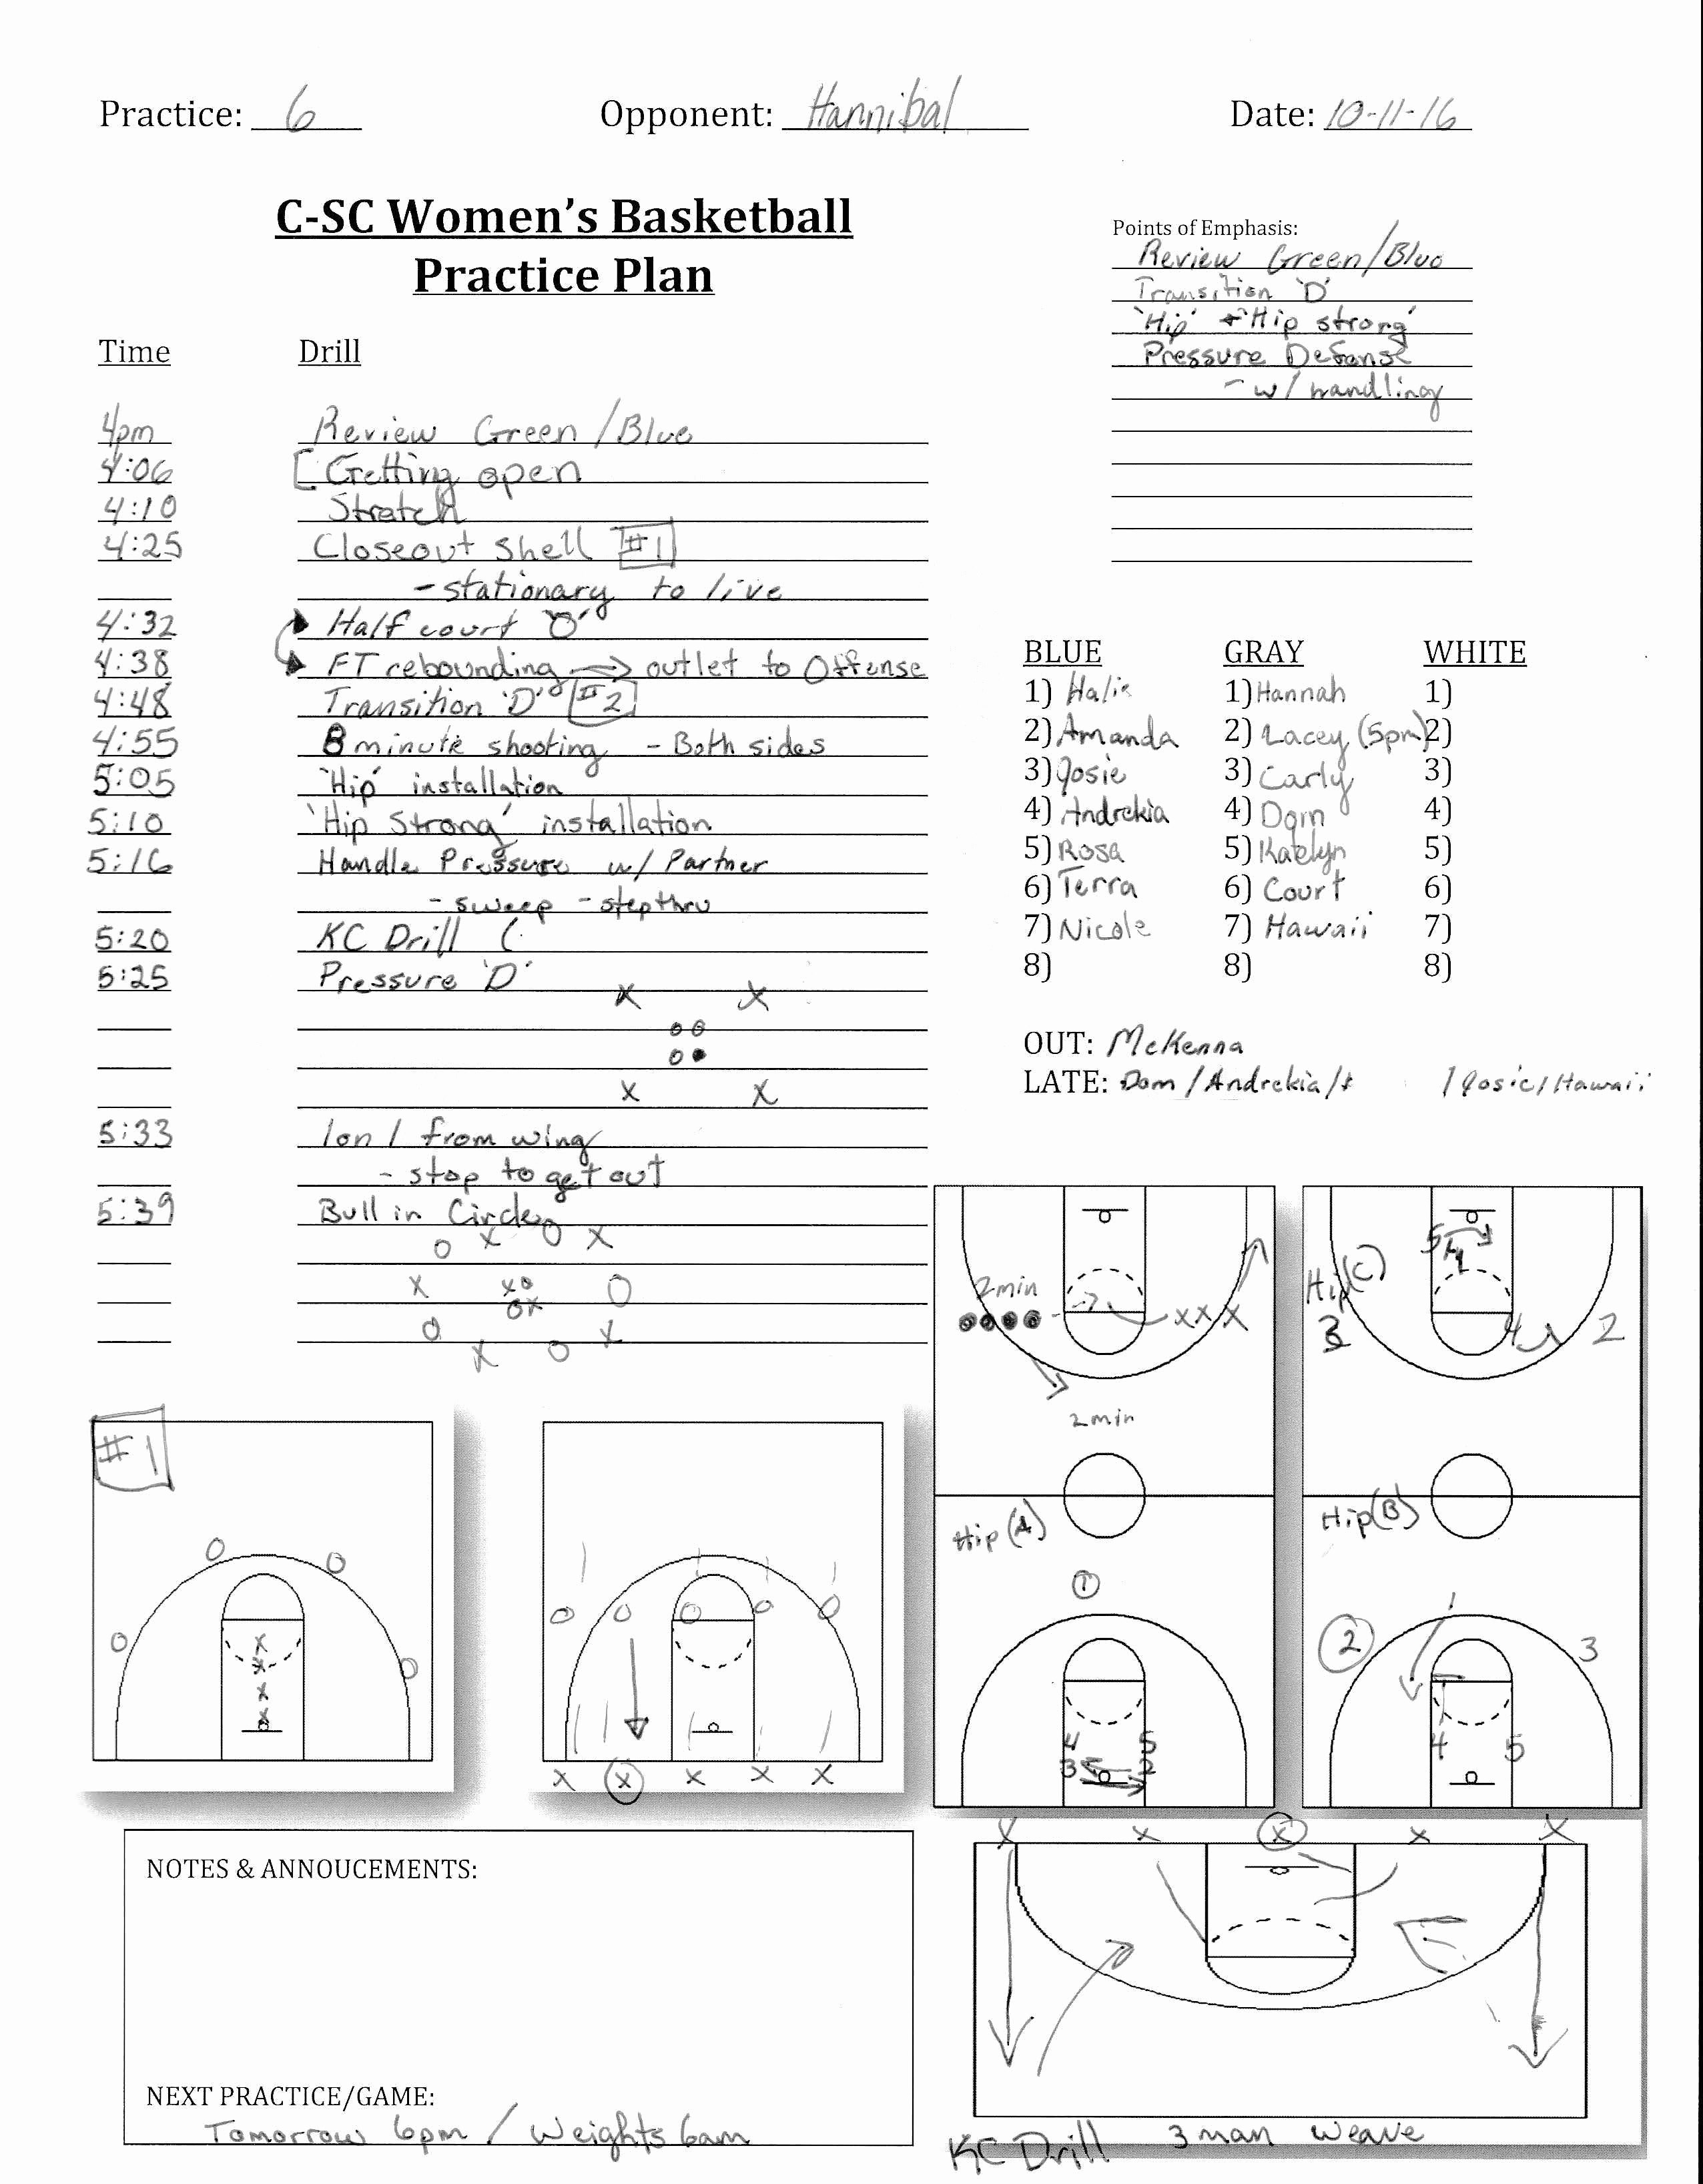 Midwest Elite Basketball Culver Stockton Wbb Practice Plan